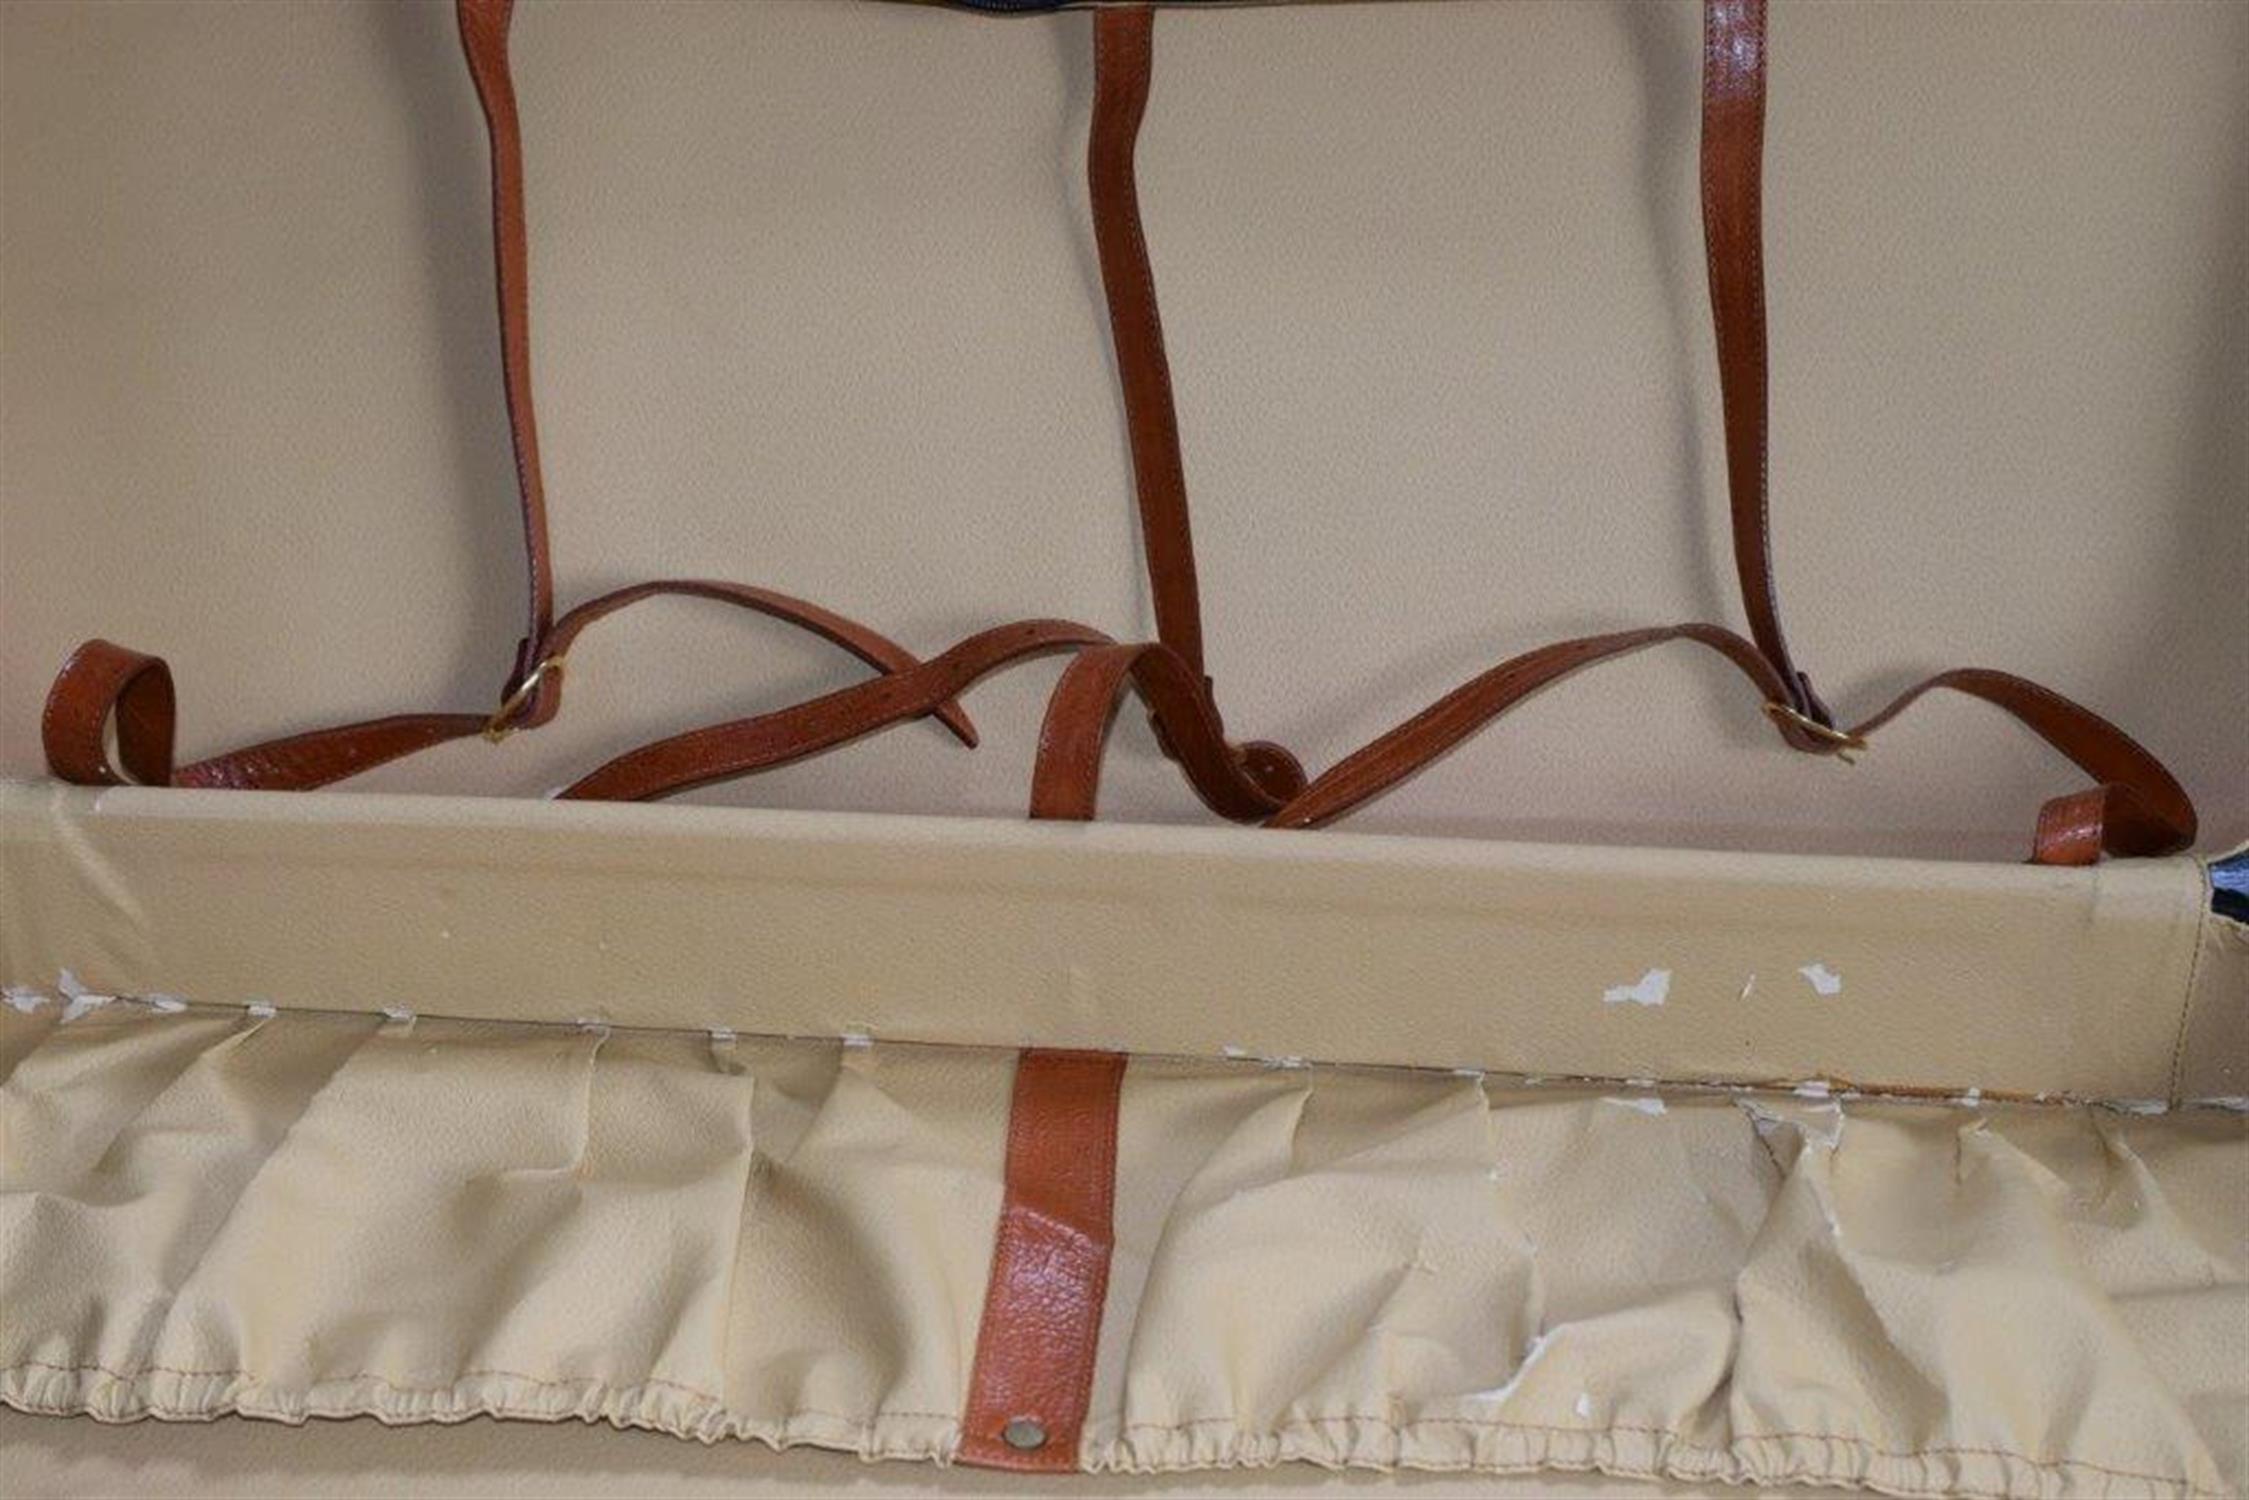 Tan Five-Piece Leather Testarossa Luggage Set by Shedoni - Image 4 of 7